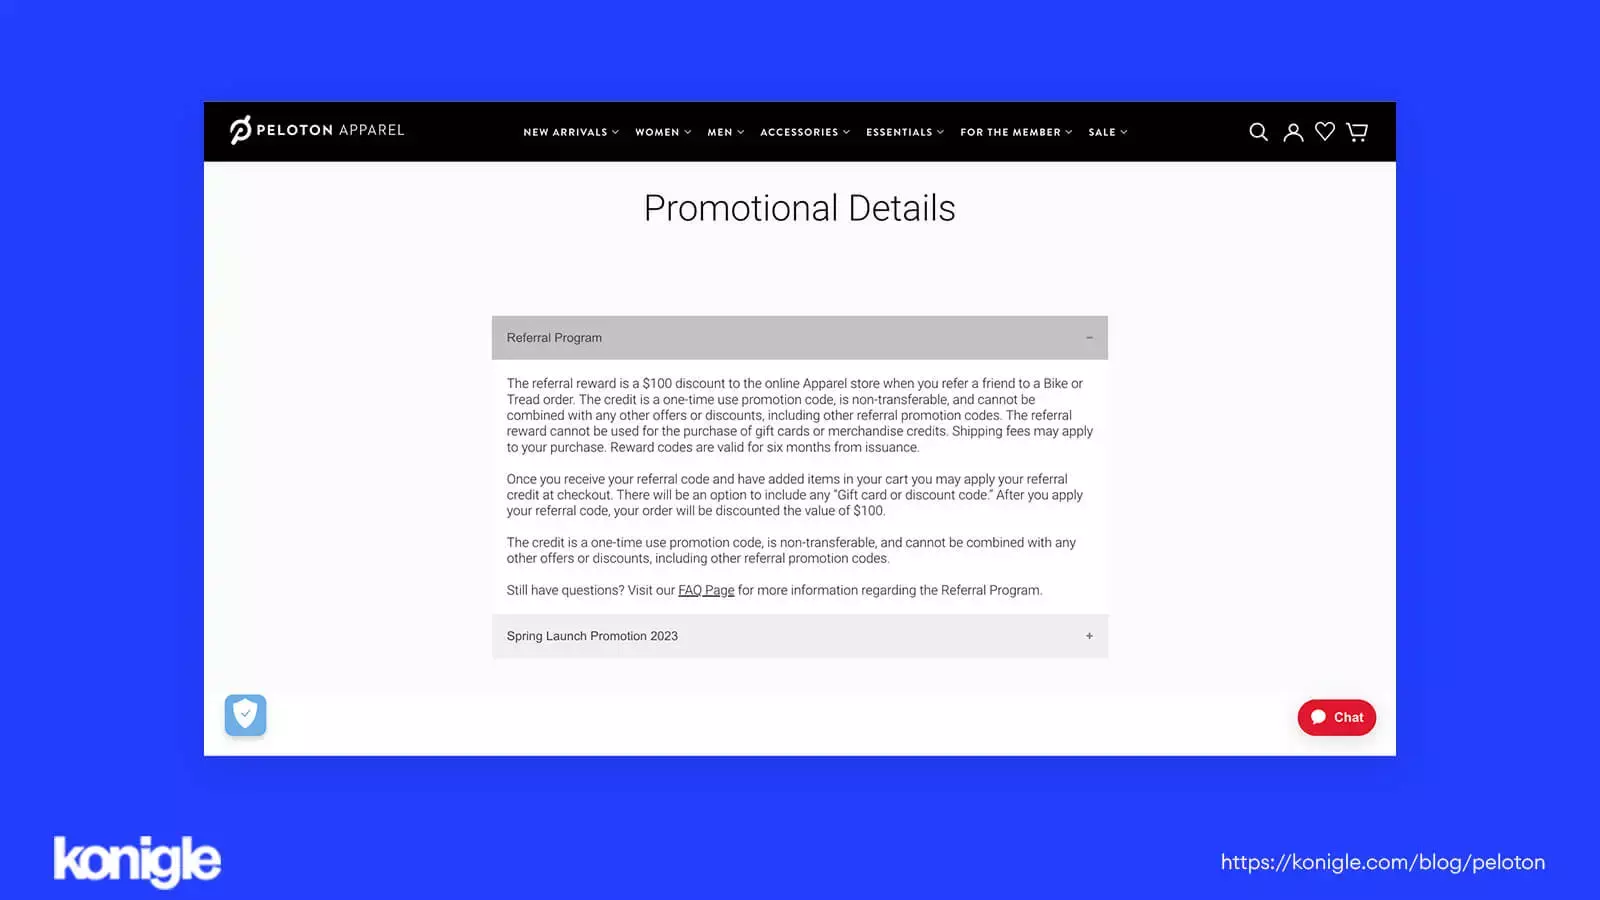 Peloton's promotional details for their referral program